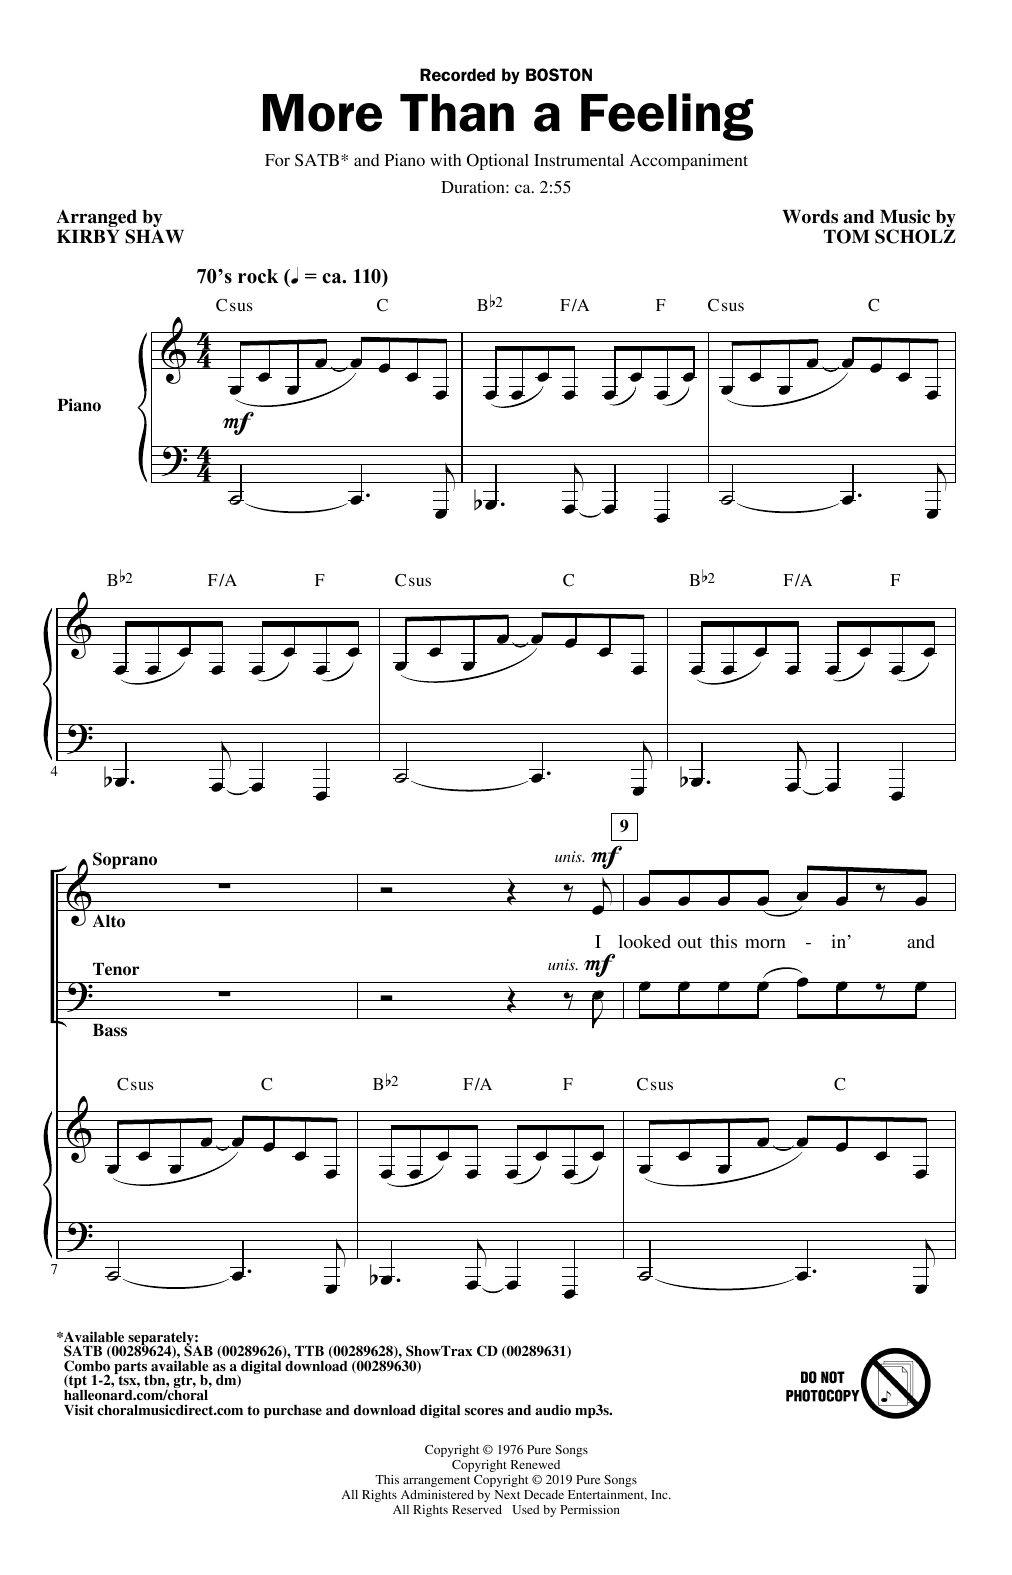 Boston More Than a Feeling (arr. Kirby Shaw) Sheet Music Notes & Chords for TTBB Choir - Download or Print PDF